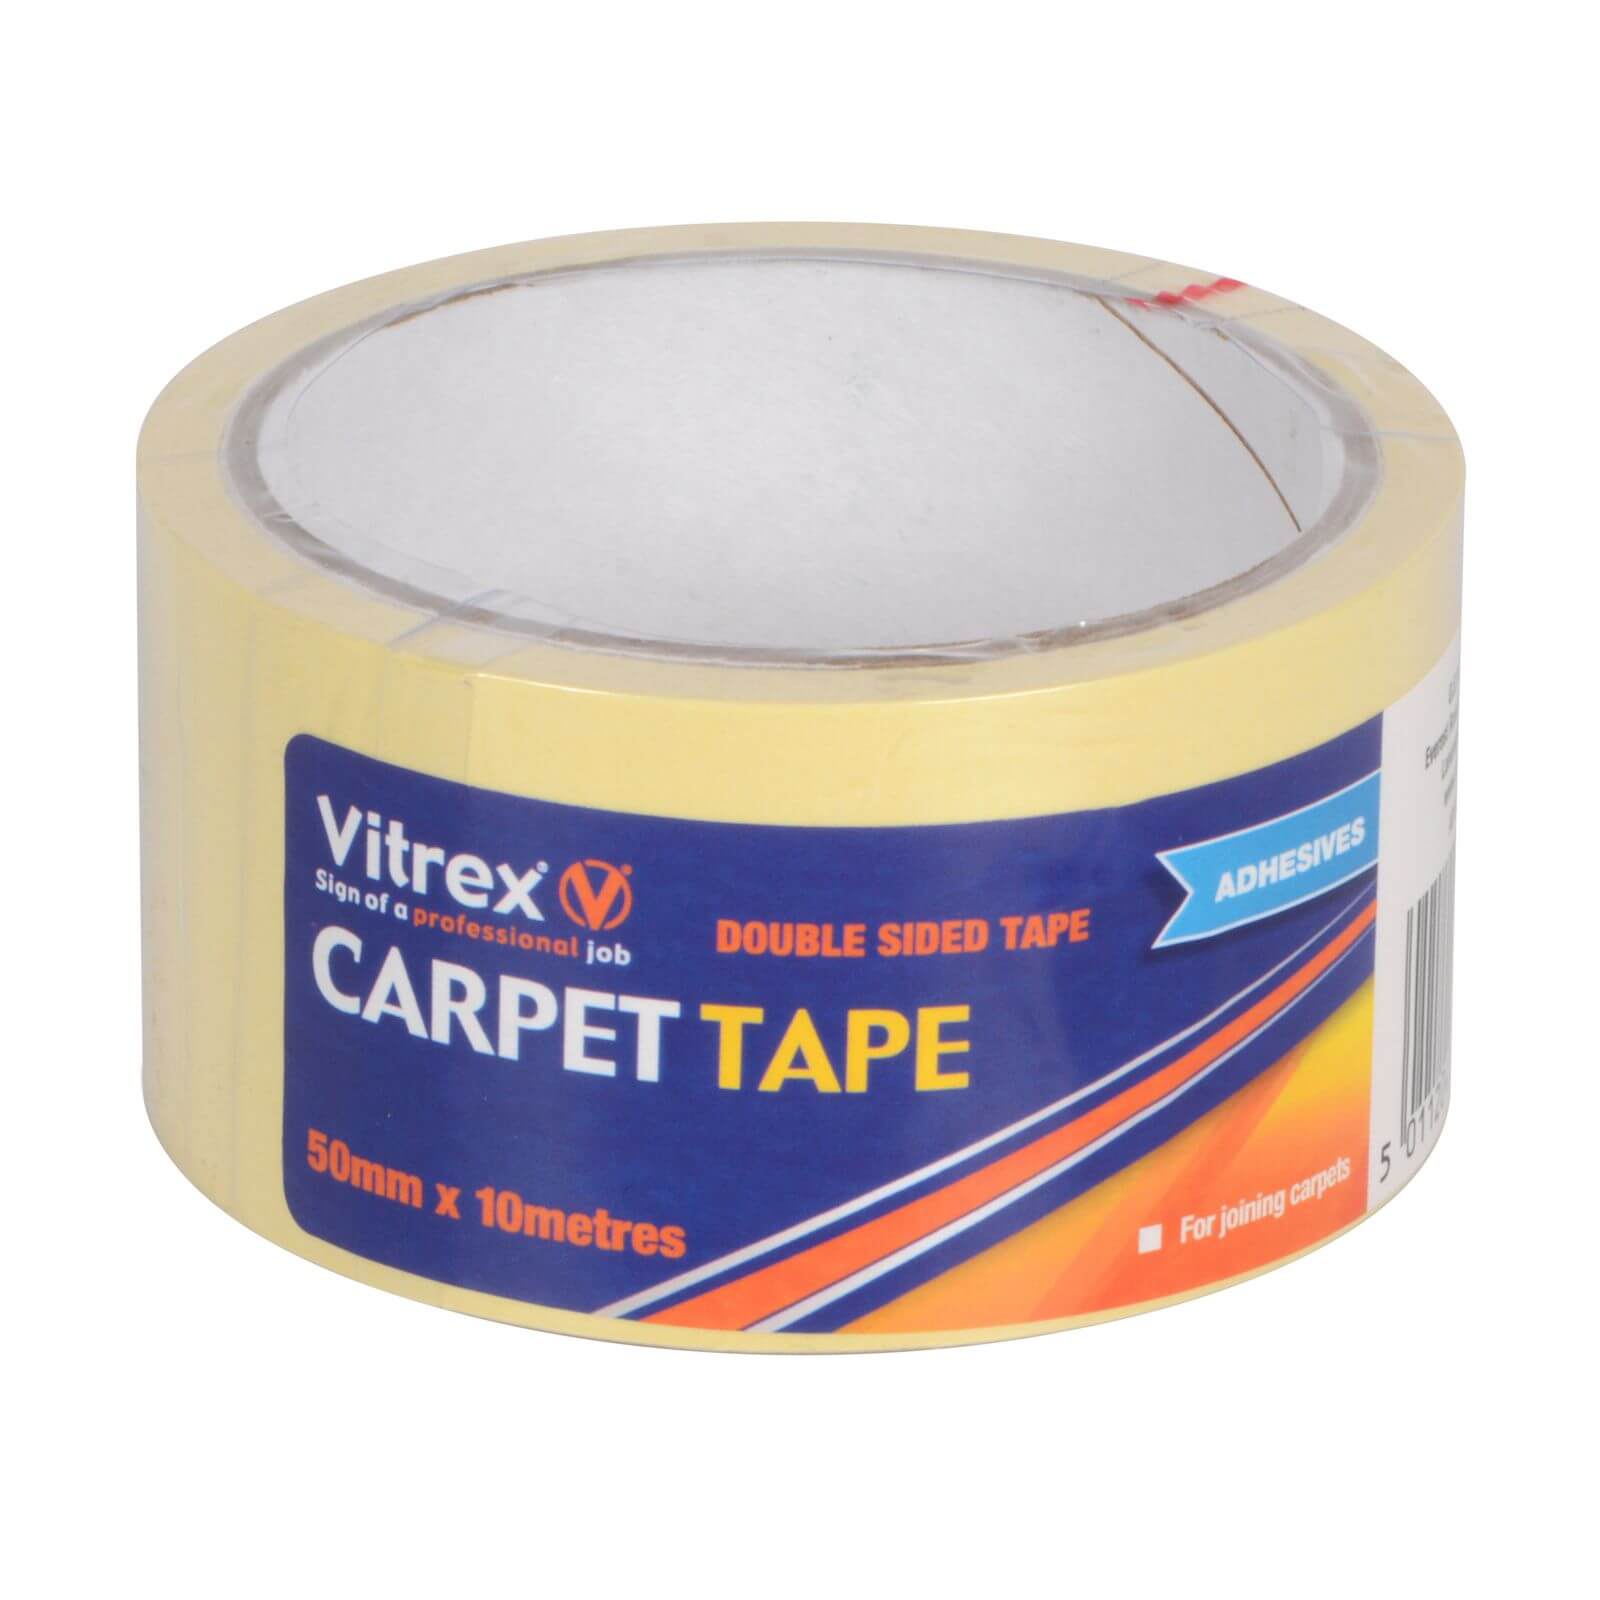 Vitrex Carpet Tape Double Sided - 10m